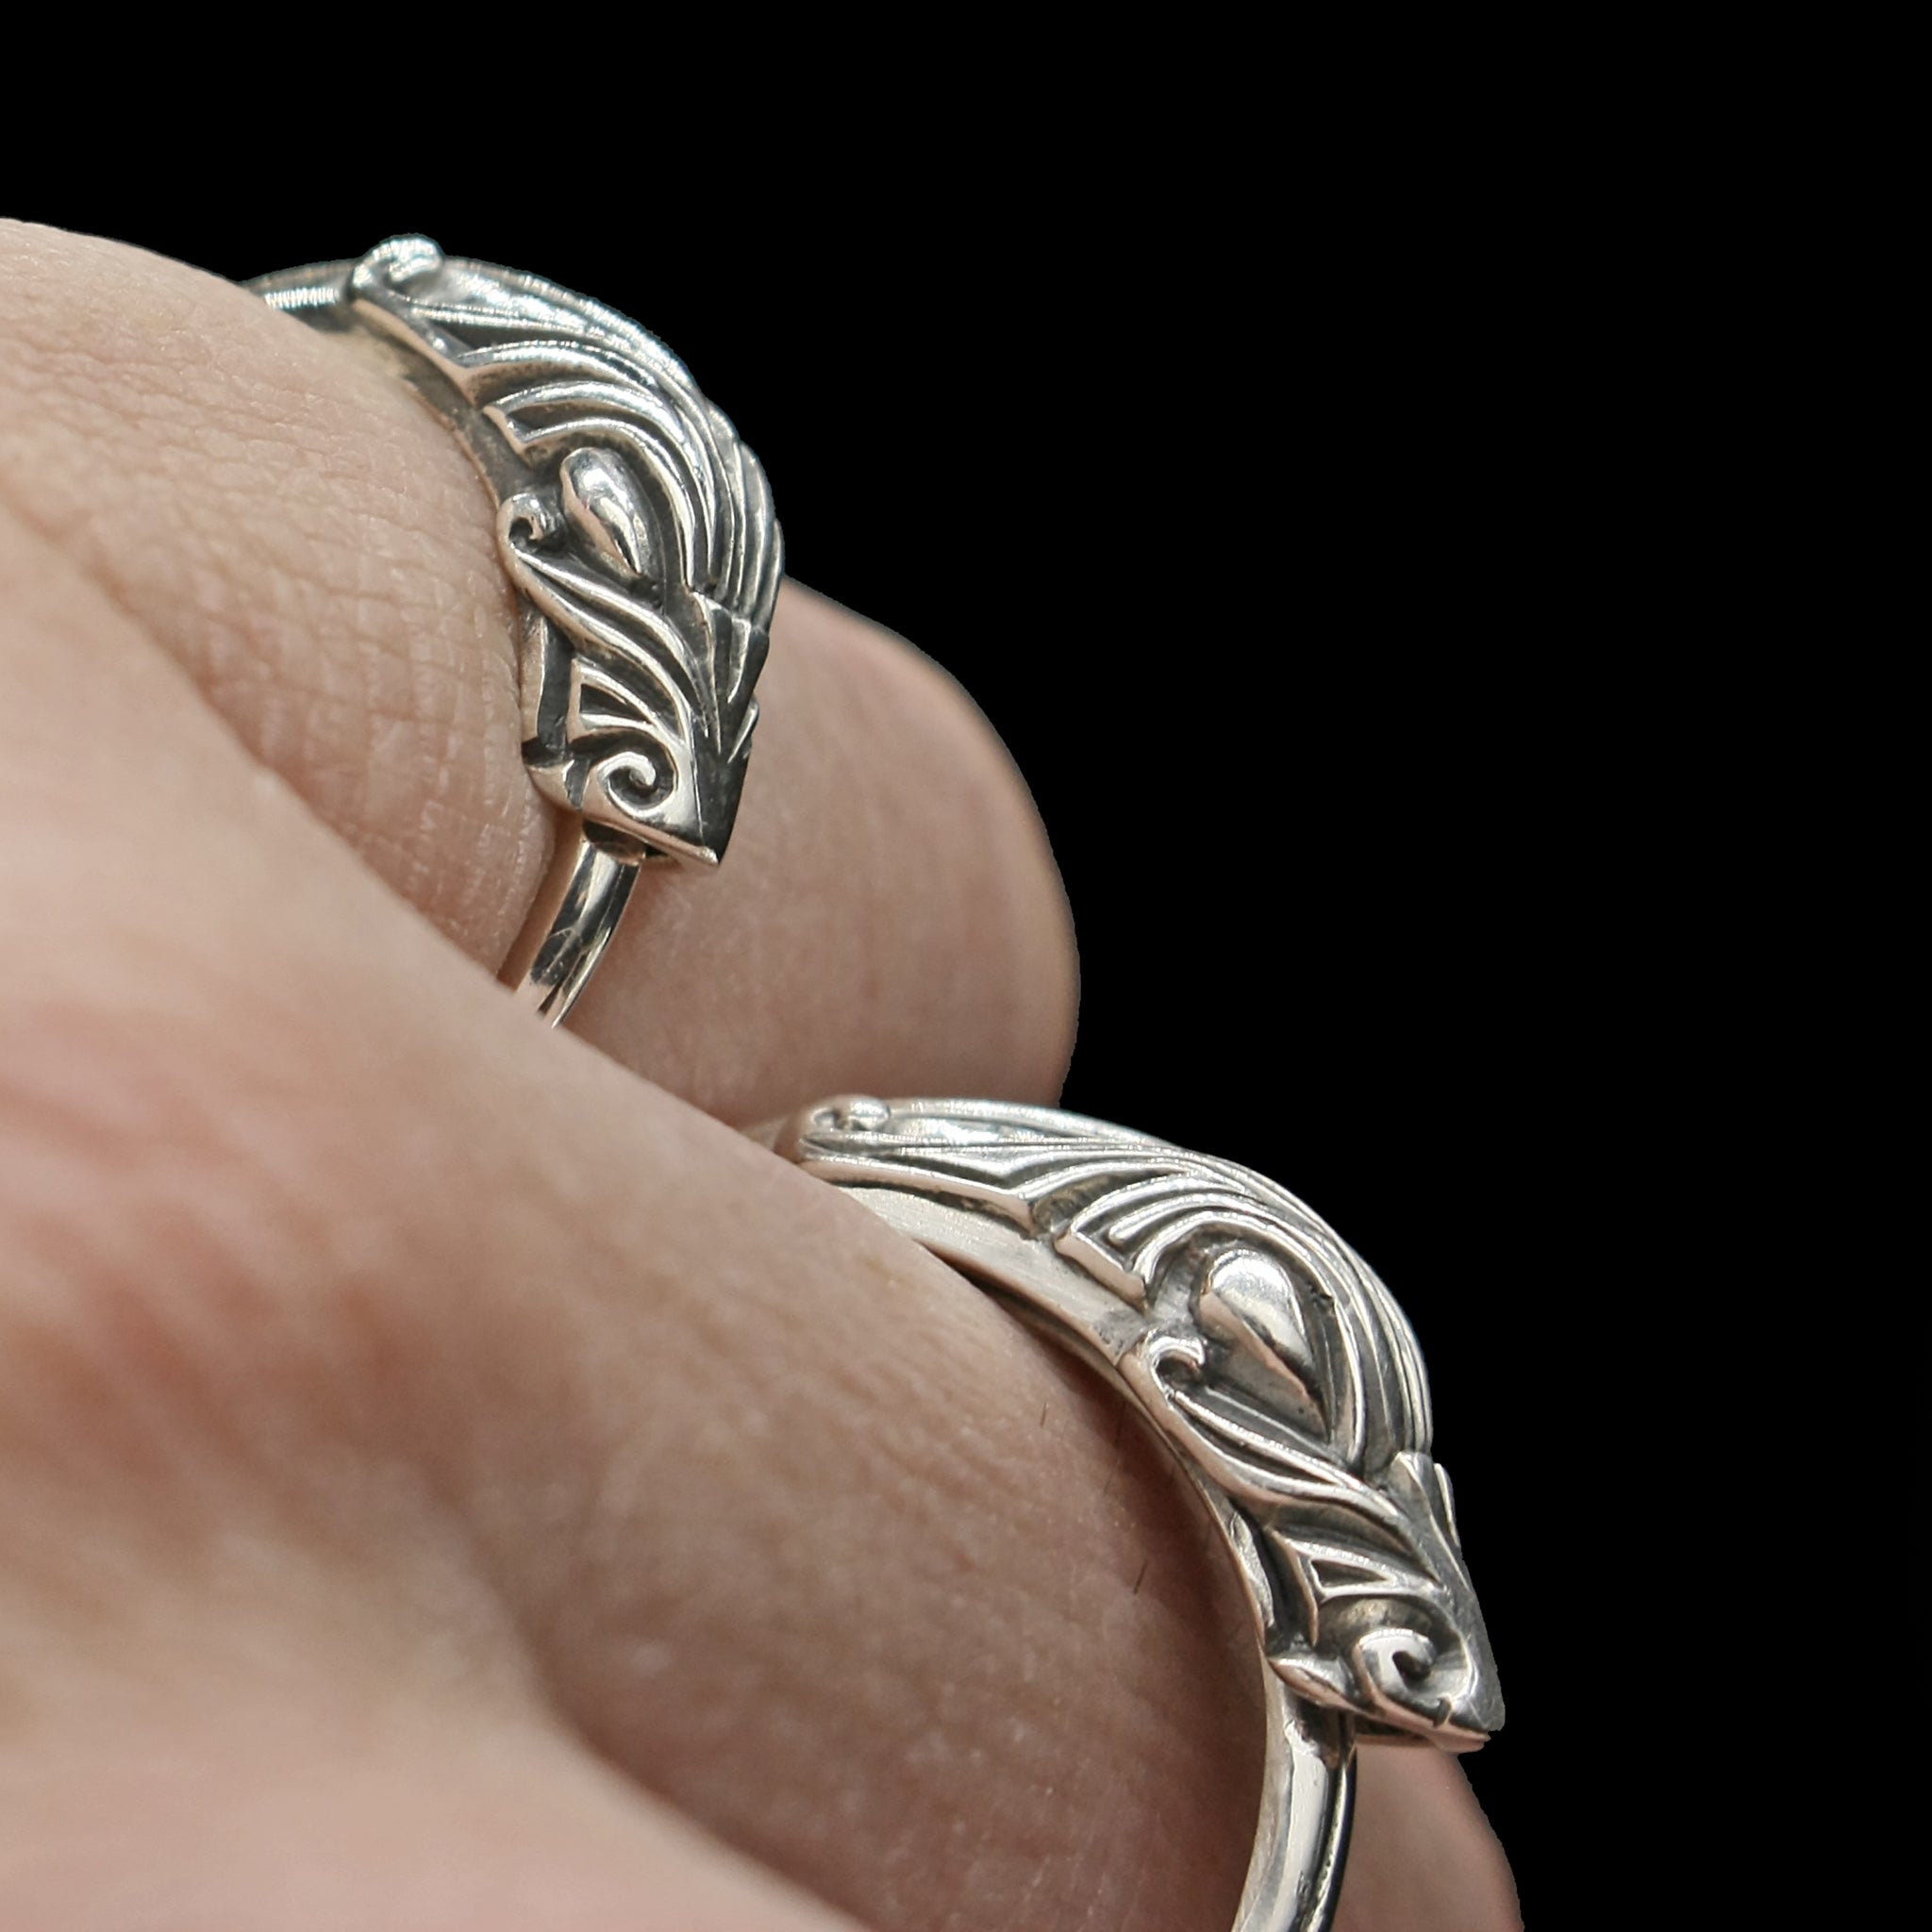 Silver Jormungandr Serpent Rings on Hand